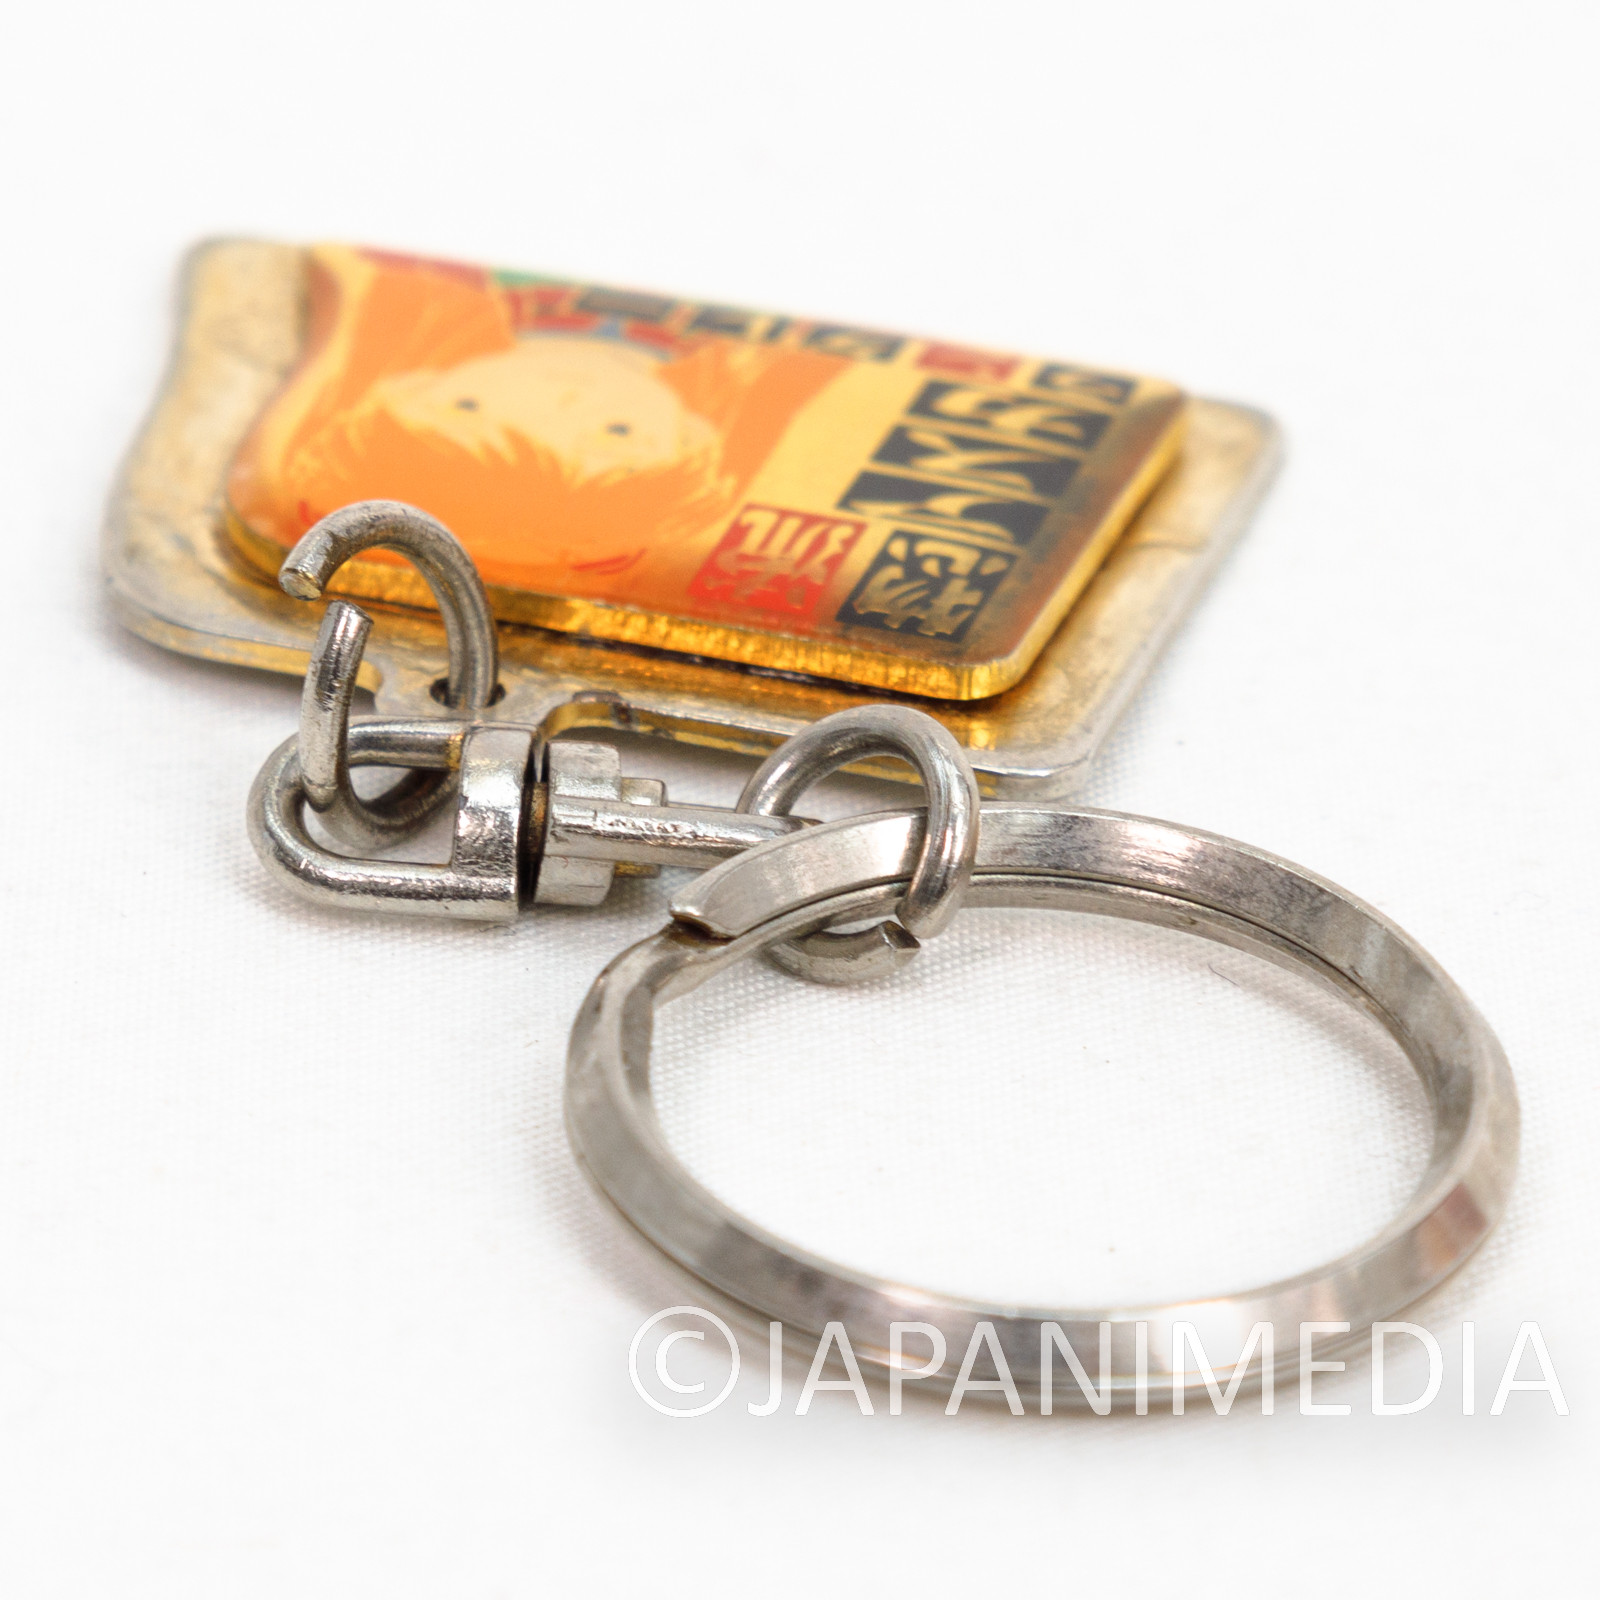 Retro RARE Evangelion Asuka Langley Metal Charm Keychain JAPAN 2